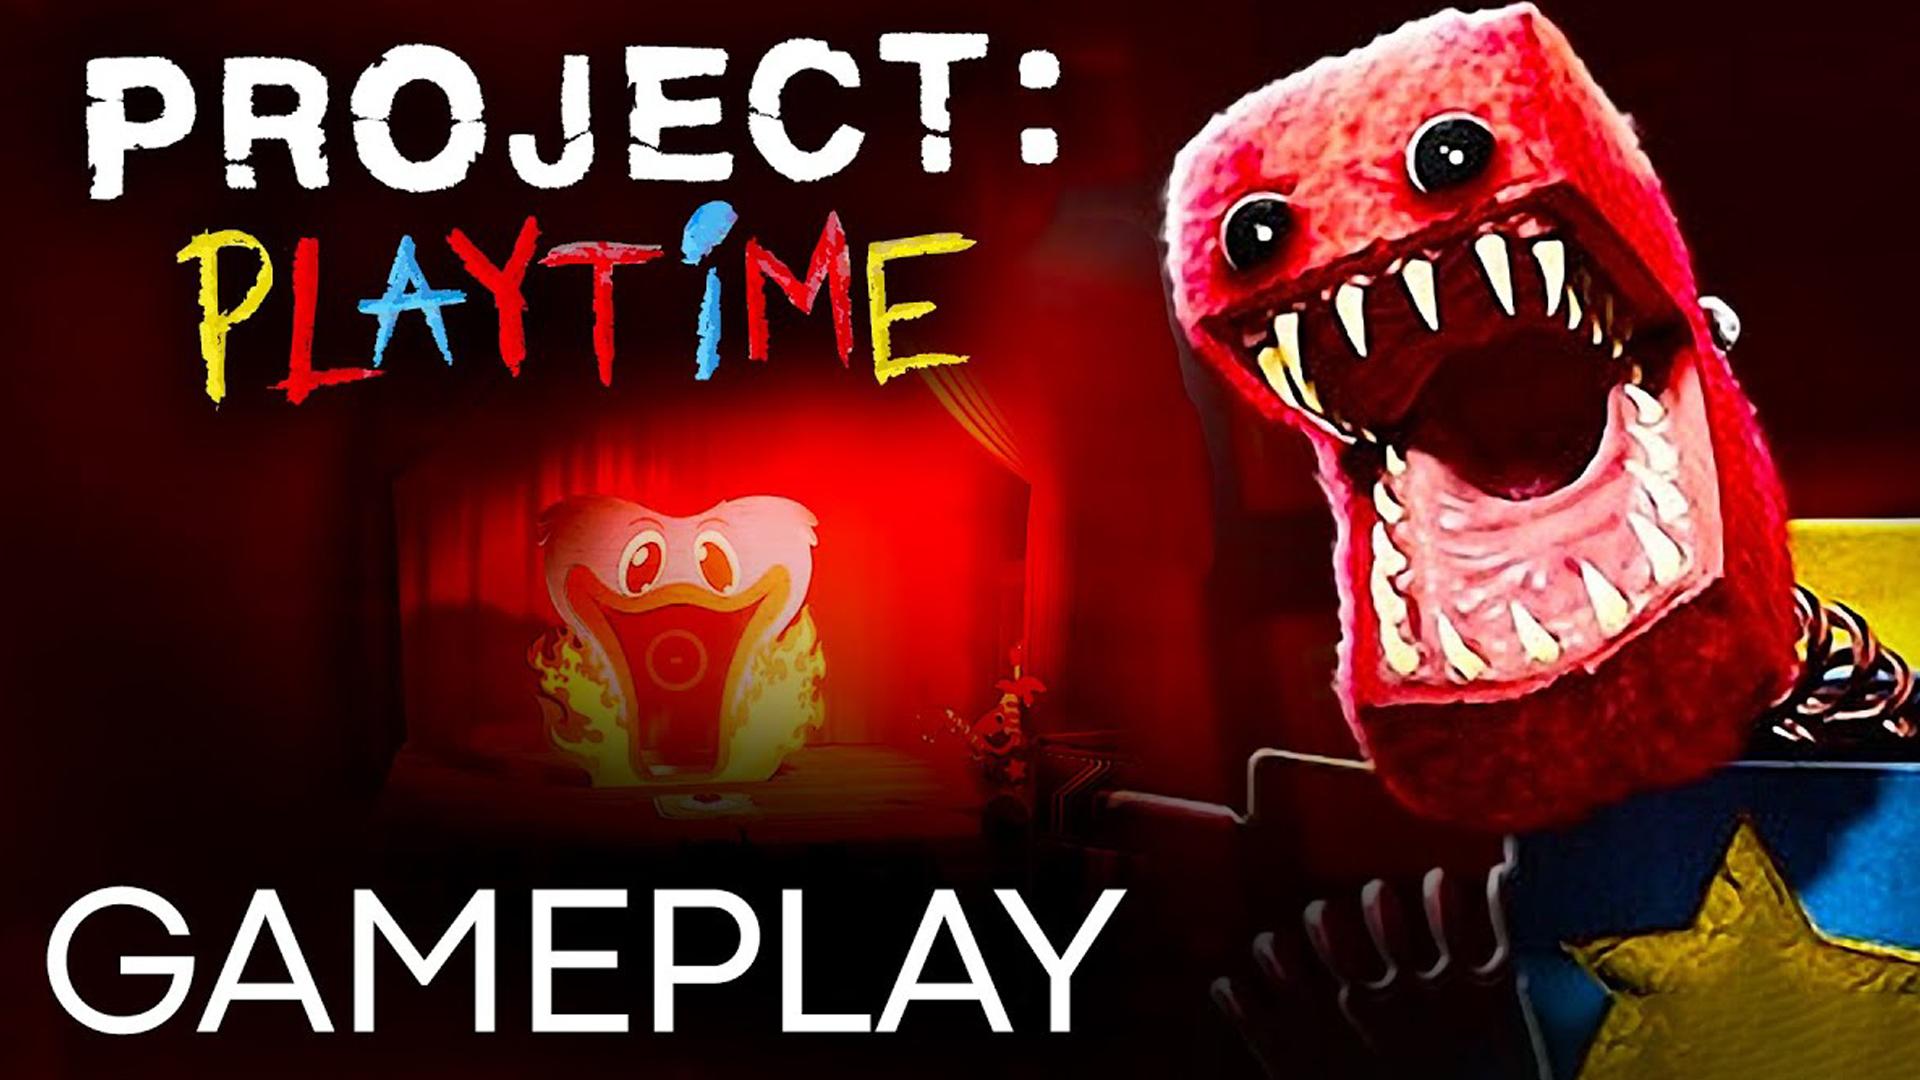 Персонажи из поппи плей тайм 3. Проджект Плейтайм. Poppy Playtime Project. Poppy Playtime Project Playtime. Project Poppy Play time.